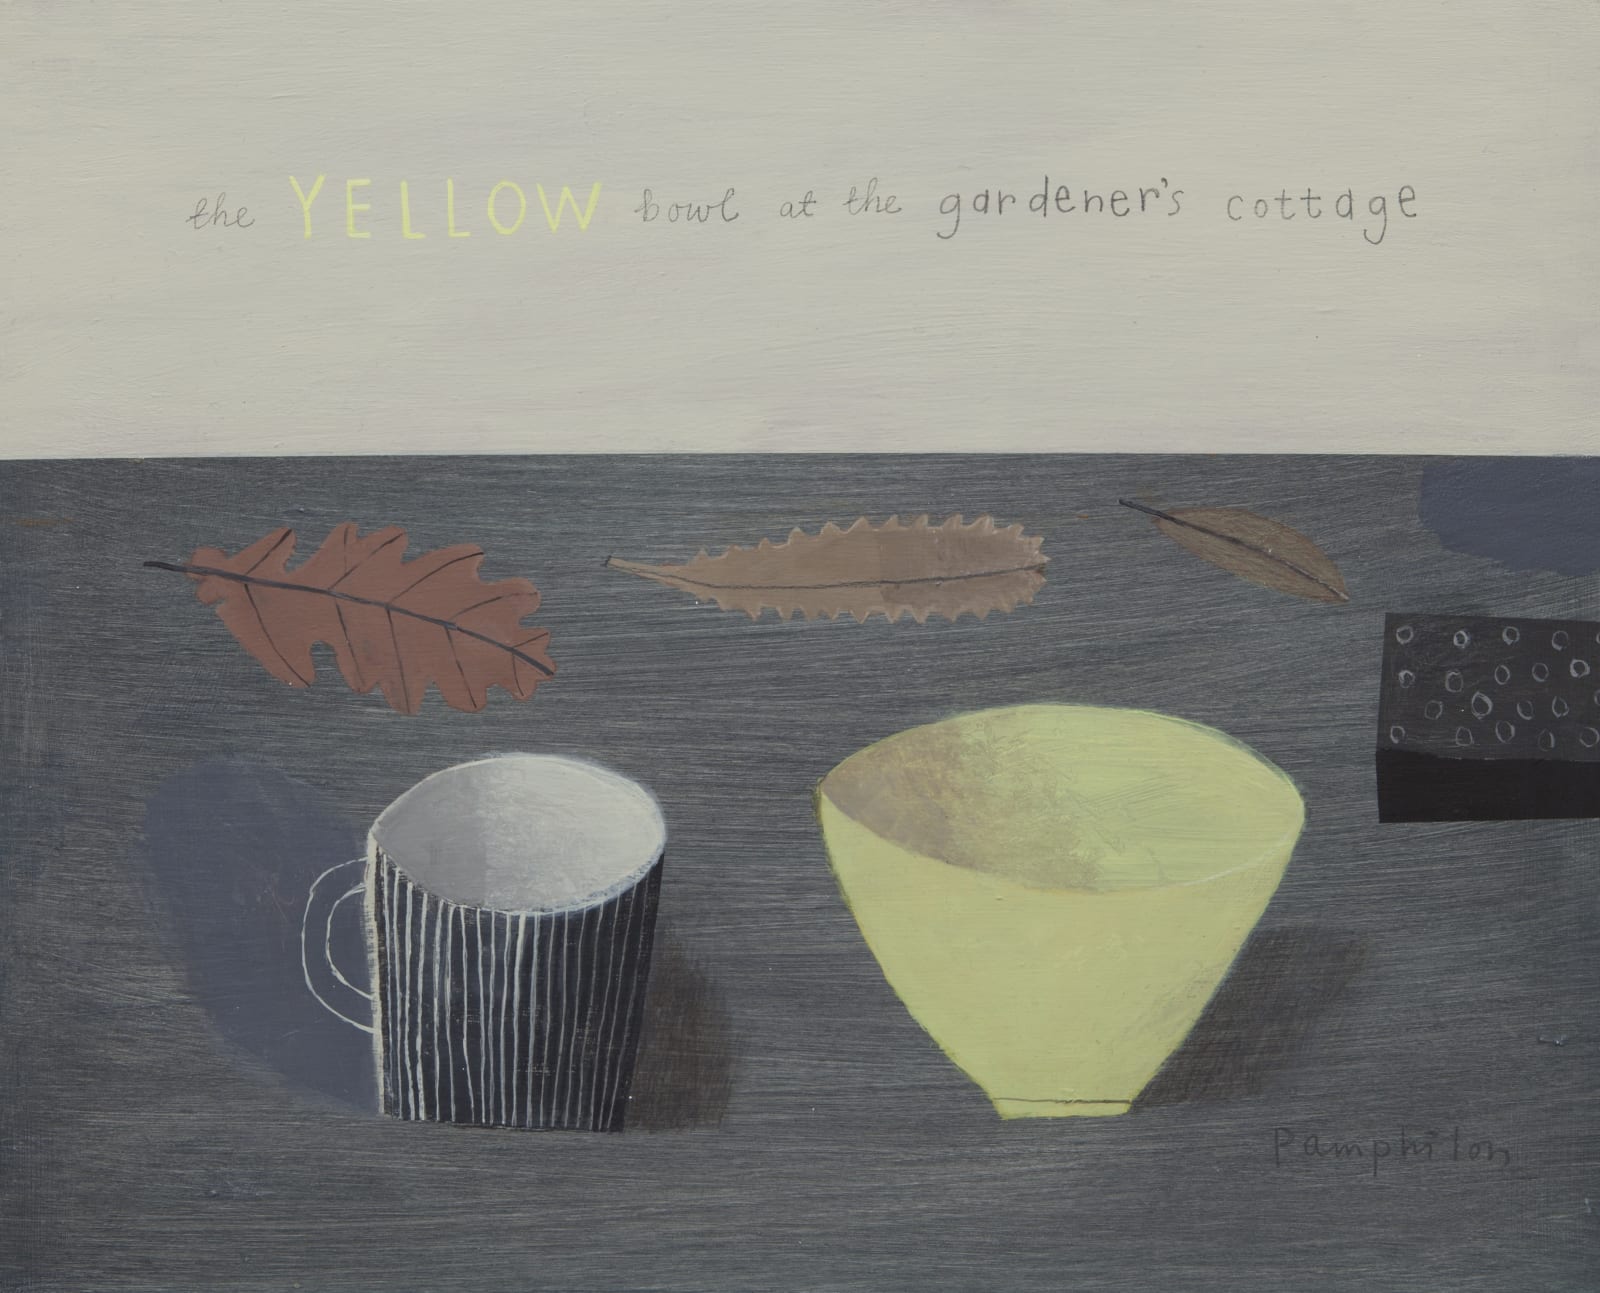 Elaine Pamphilon, The Yellow Bowl at the Gardener's Cottage